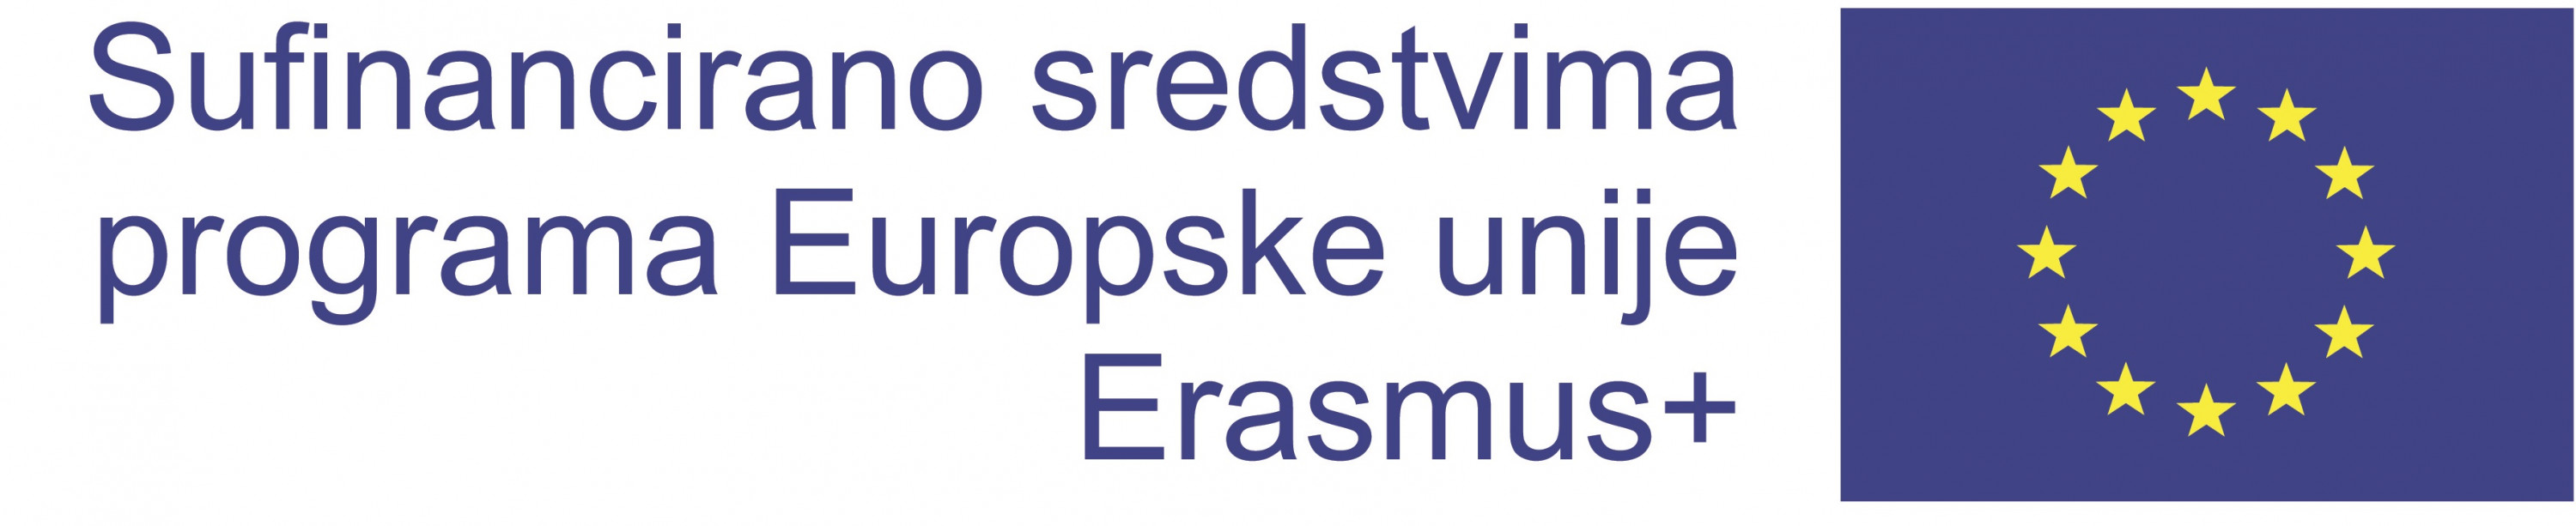 Erasmus+ logo.jpg